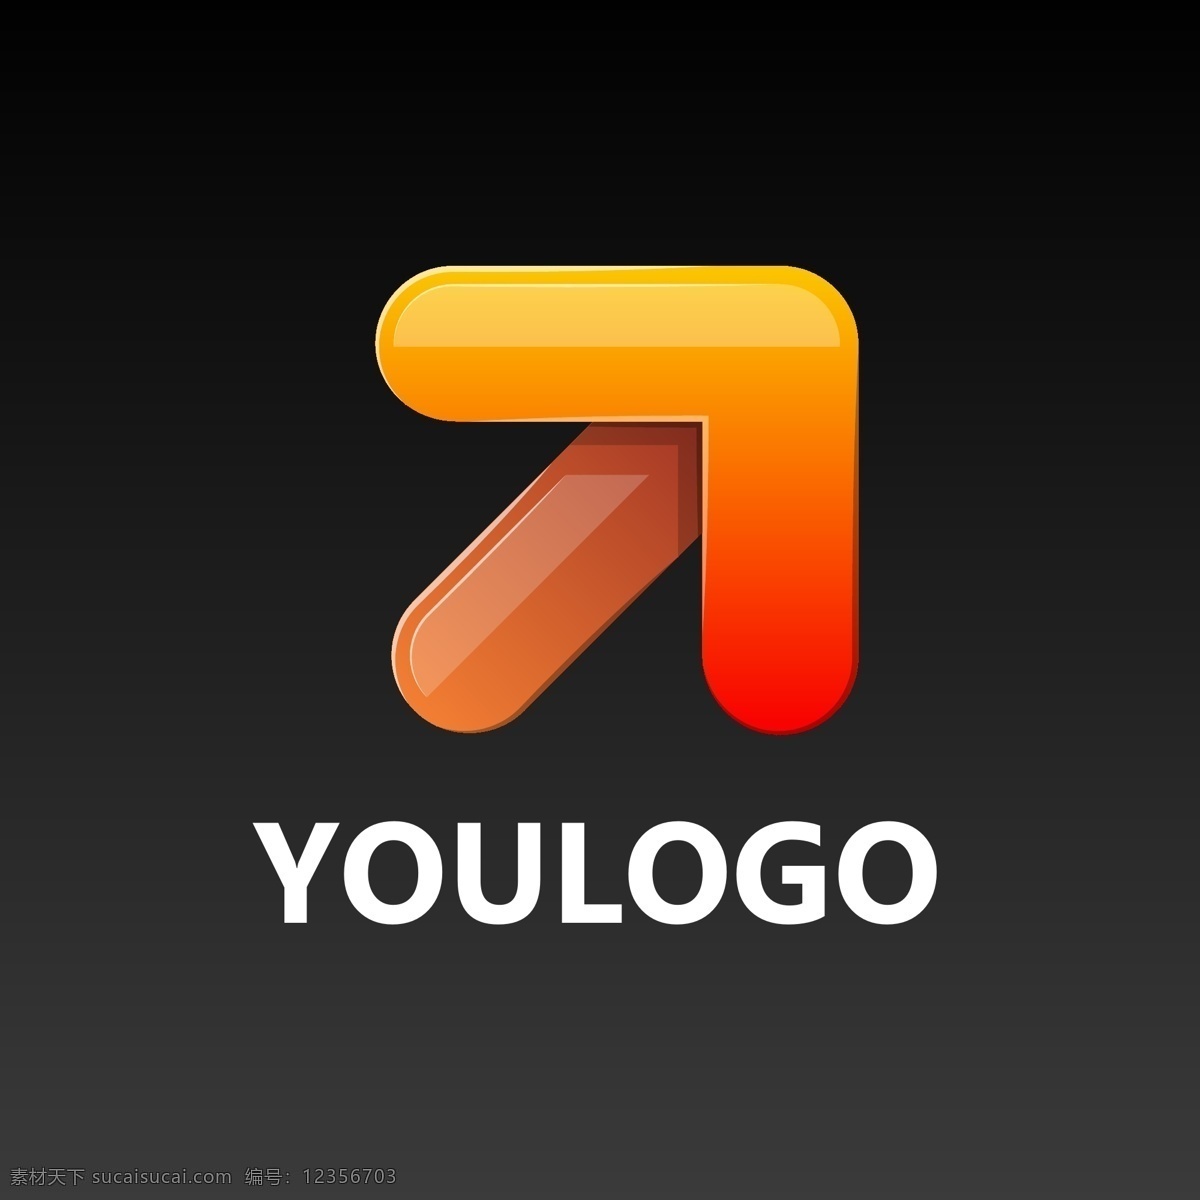 方向 logo 方向logo logo设计 渐变logo logo图形 企业logo 公司logo